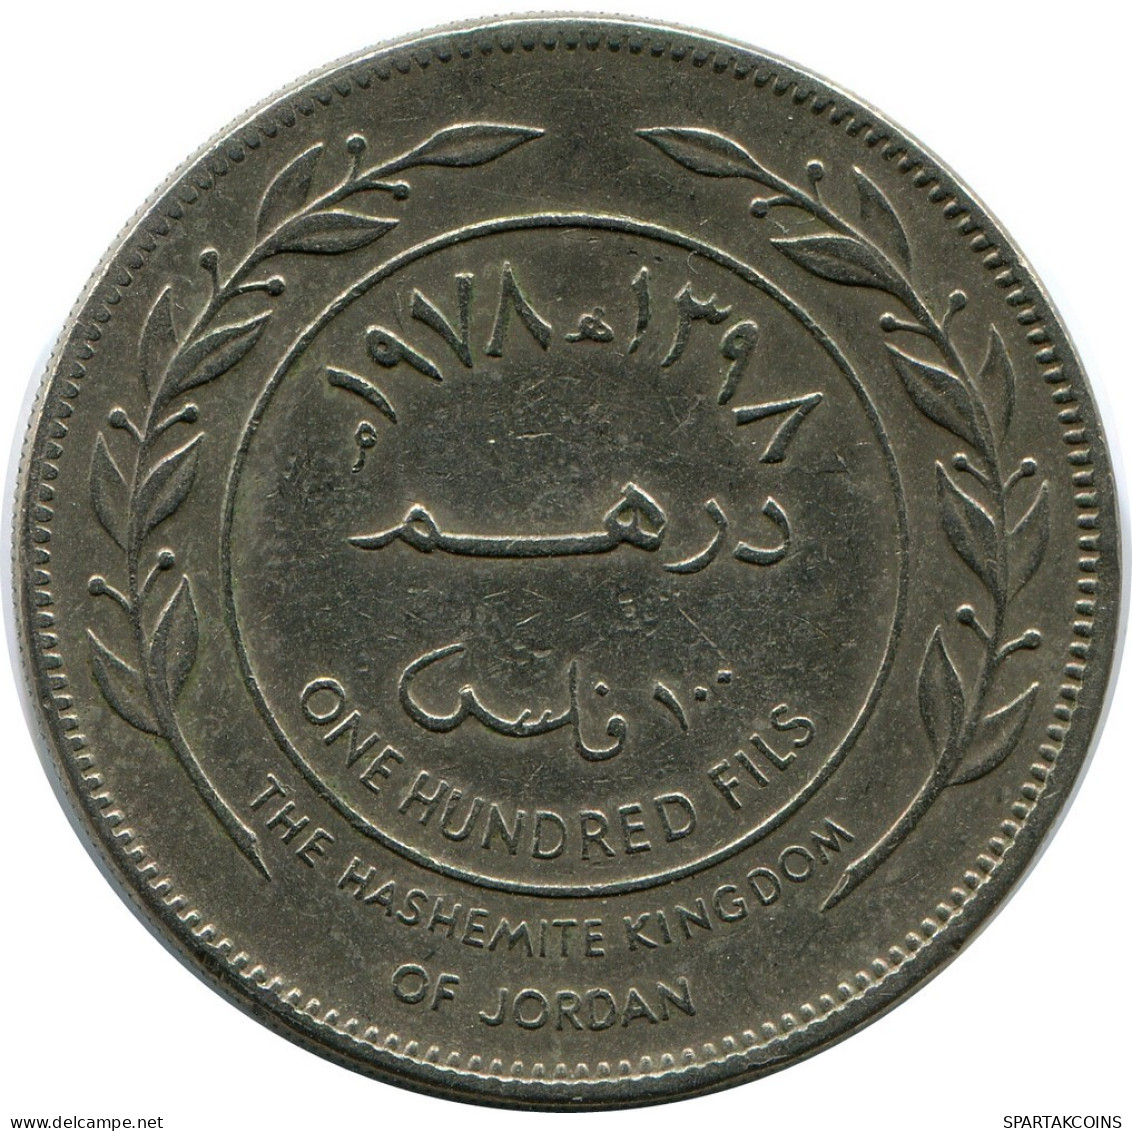 1 DIRHAM / 100 FILS 1978 JORDANIA JORDAN Islámico Moneda #AR008.E.A - Jordanien